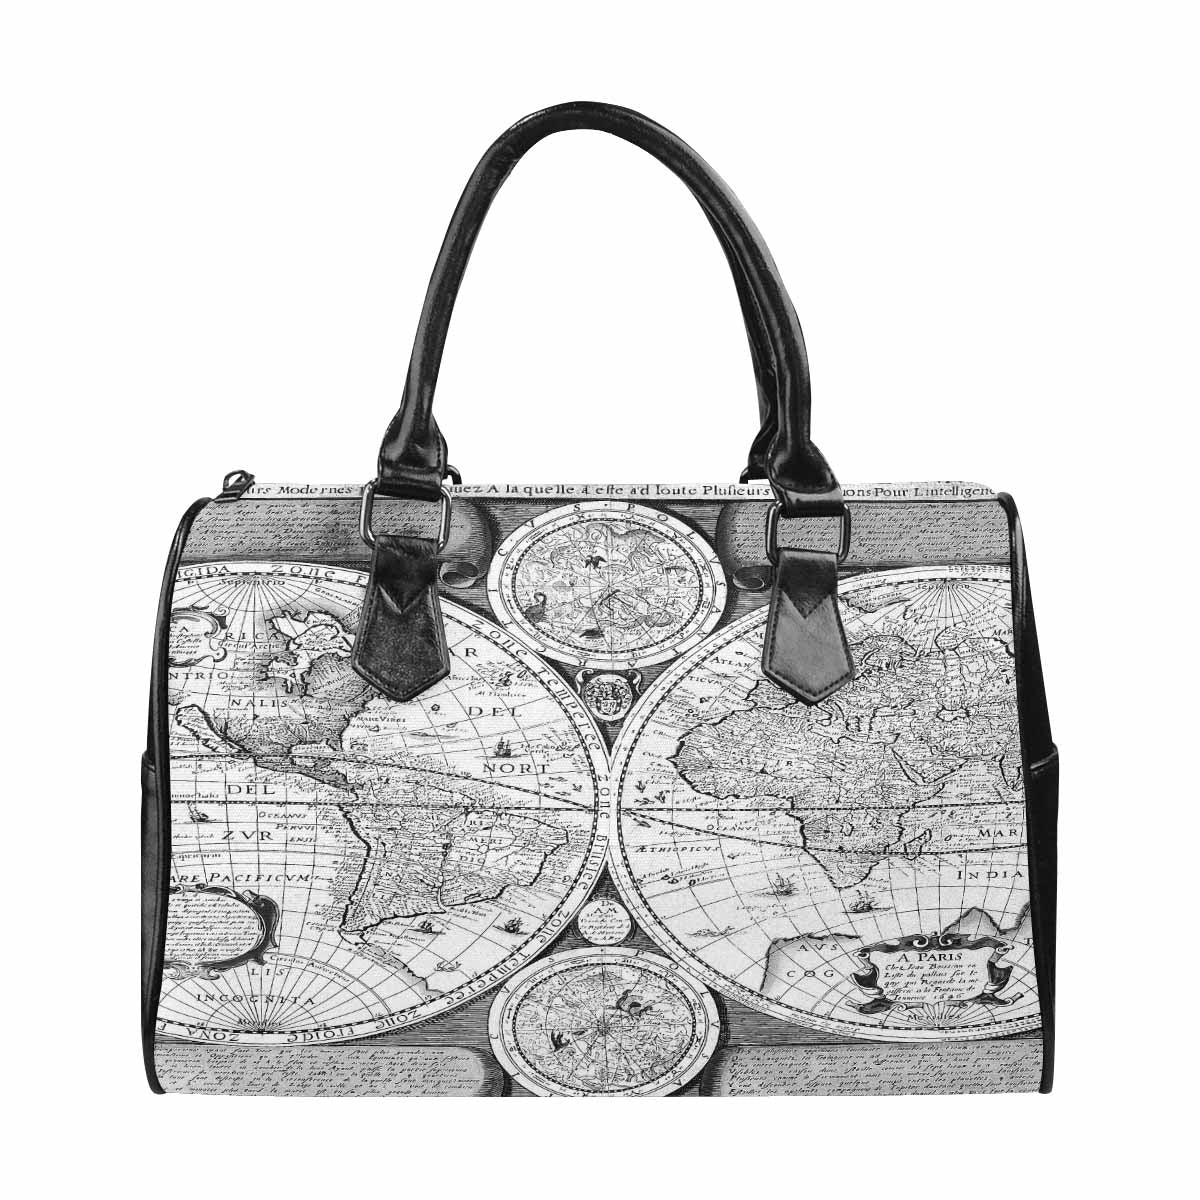 Antique Map design Boston handbag, Model 1695321, Design 29